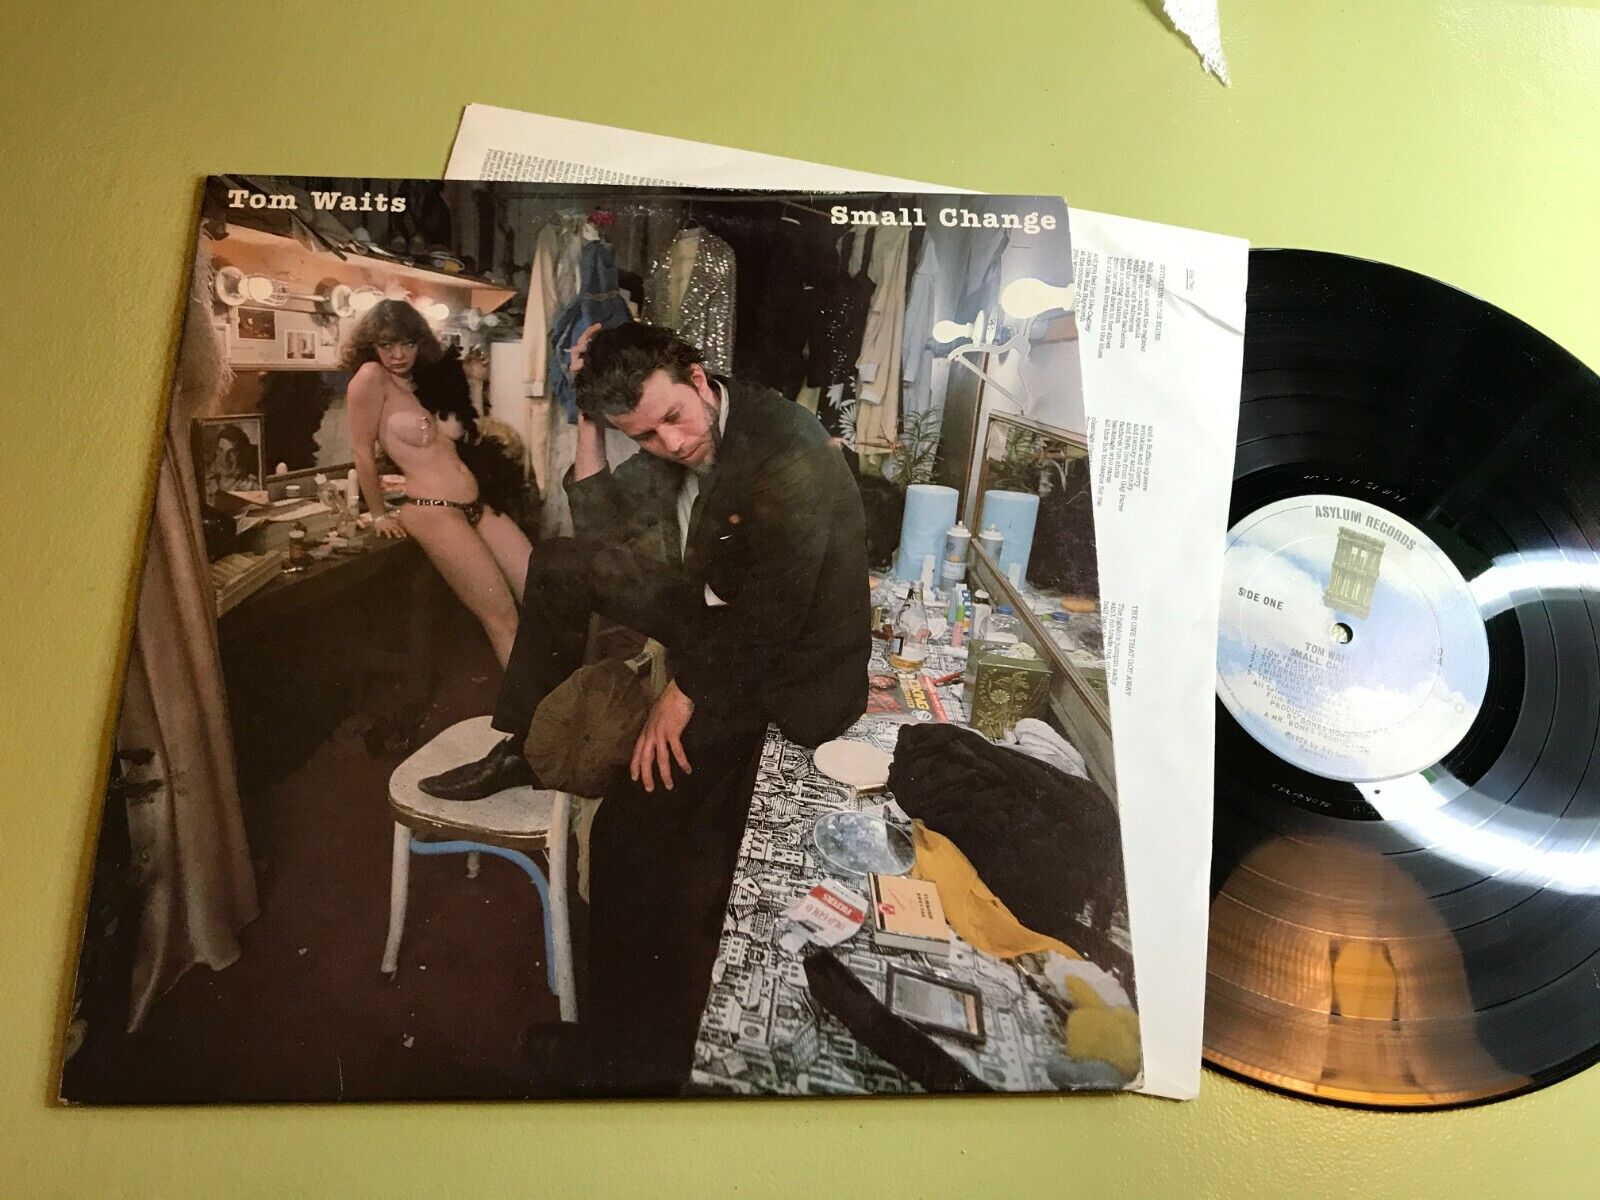 Tom Waits Small Change LP original USA 1976 asylum rare elvira cover model oop!! Tania okazja, prawdziwa gwarancja